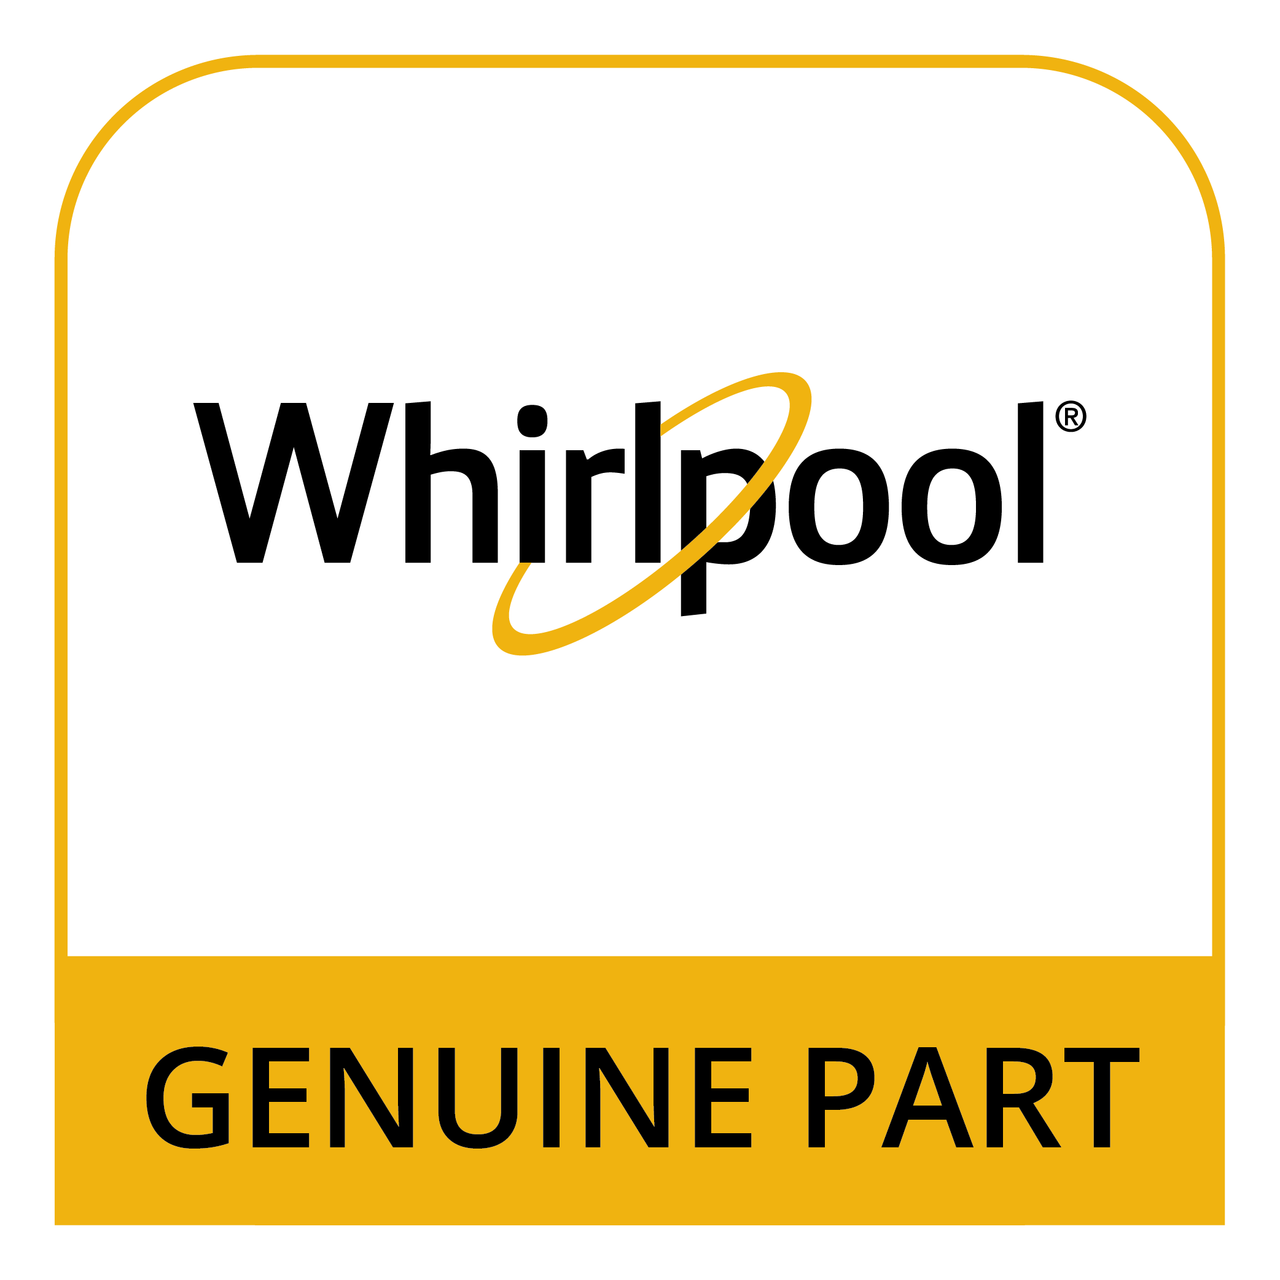 Whirlpool 0046144 - KIT KNOB - Genuine Part